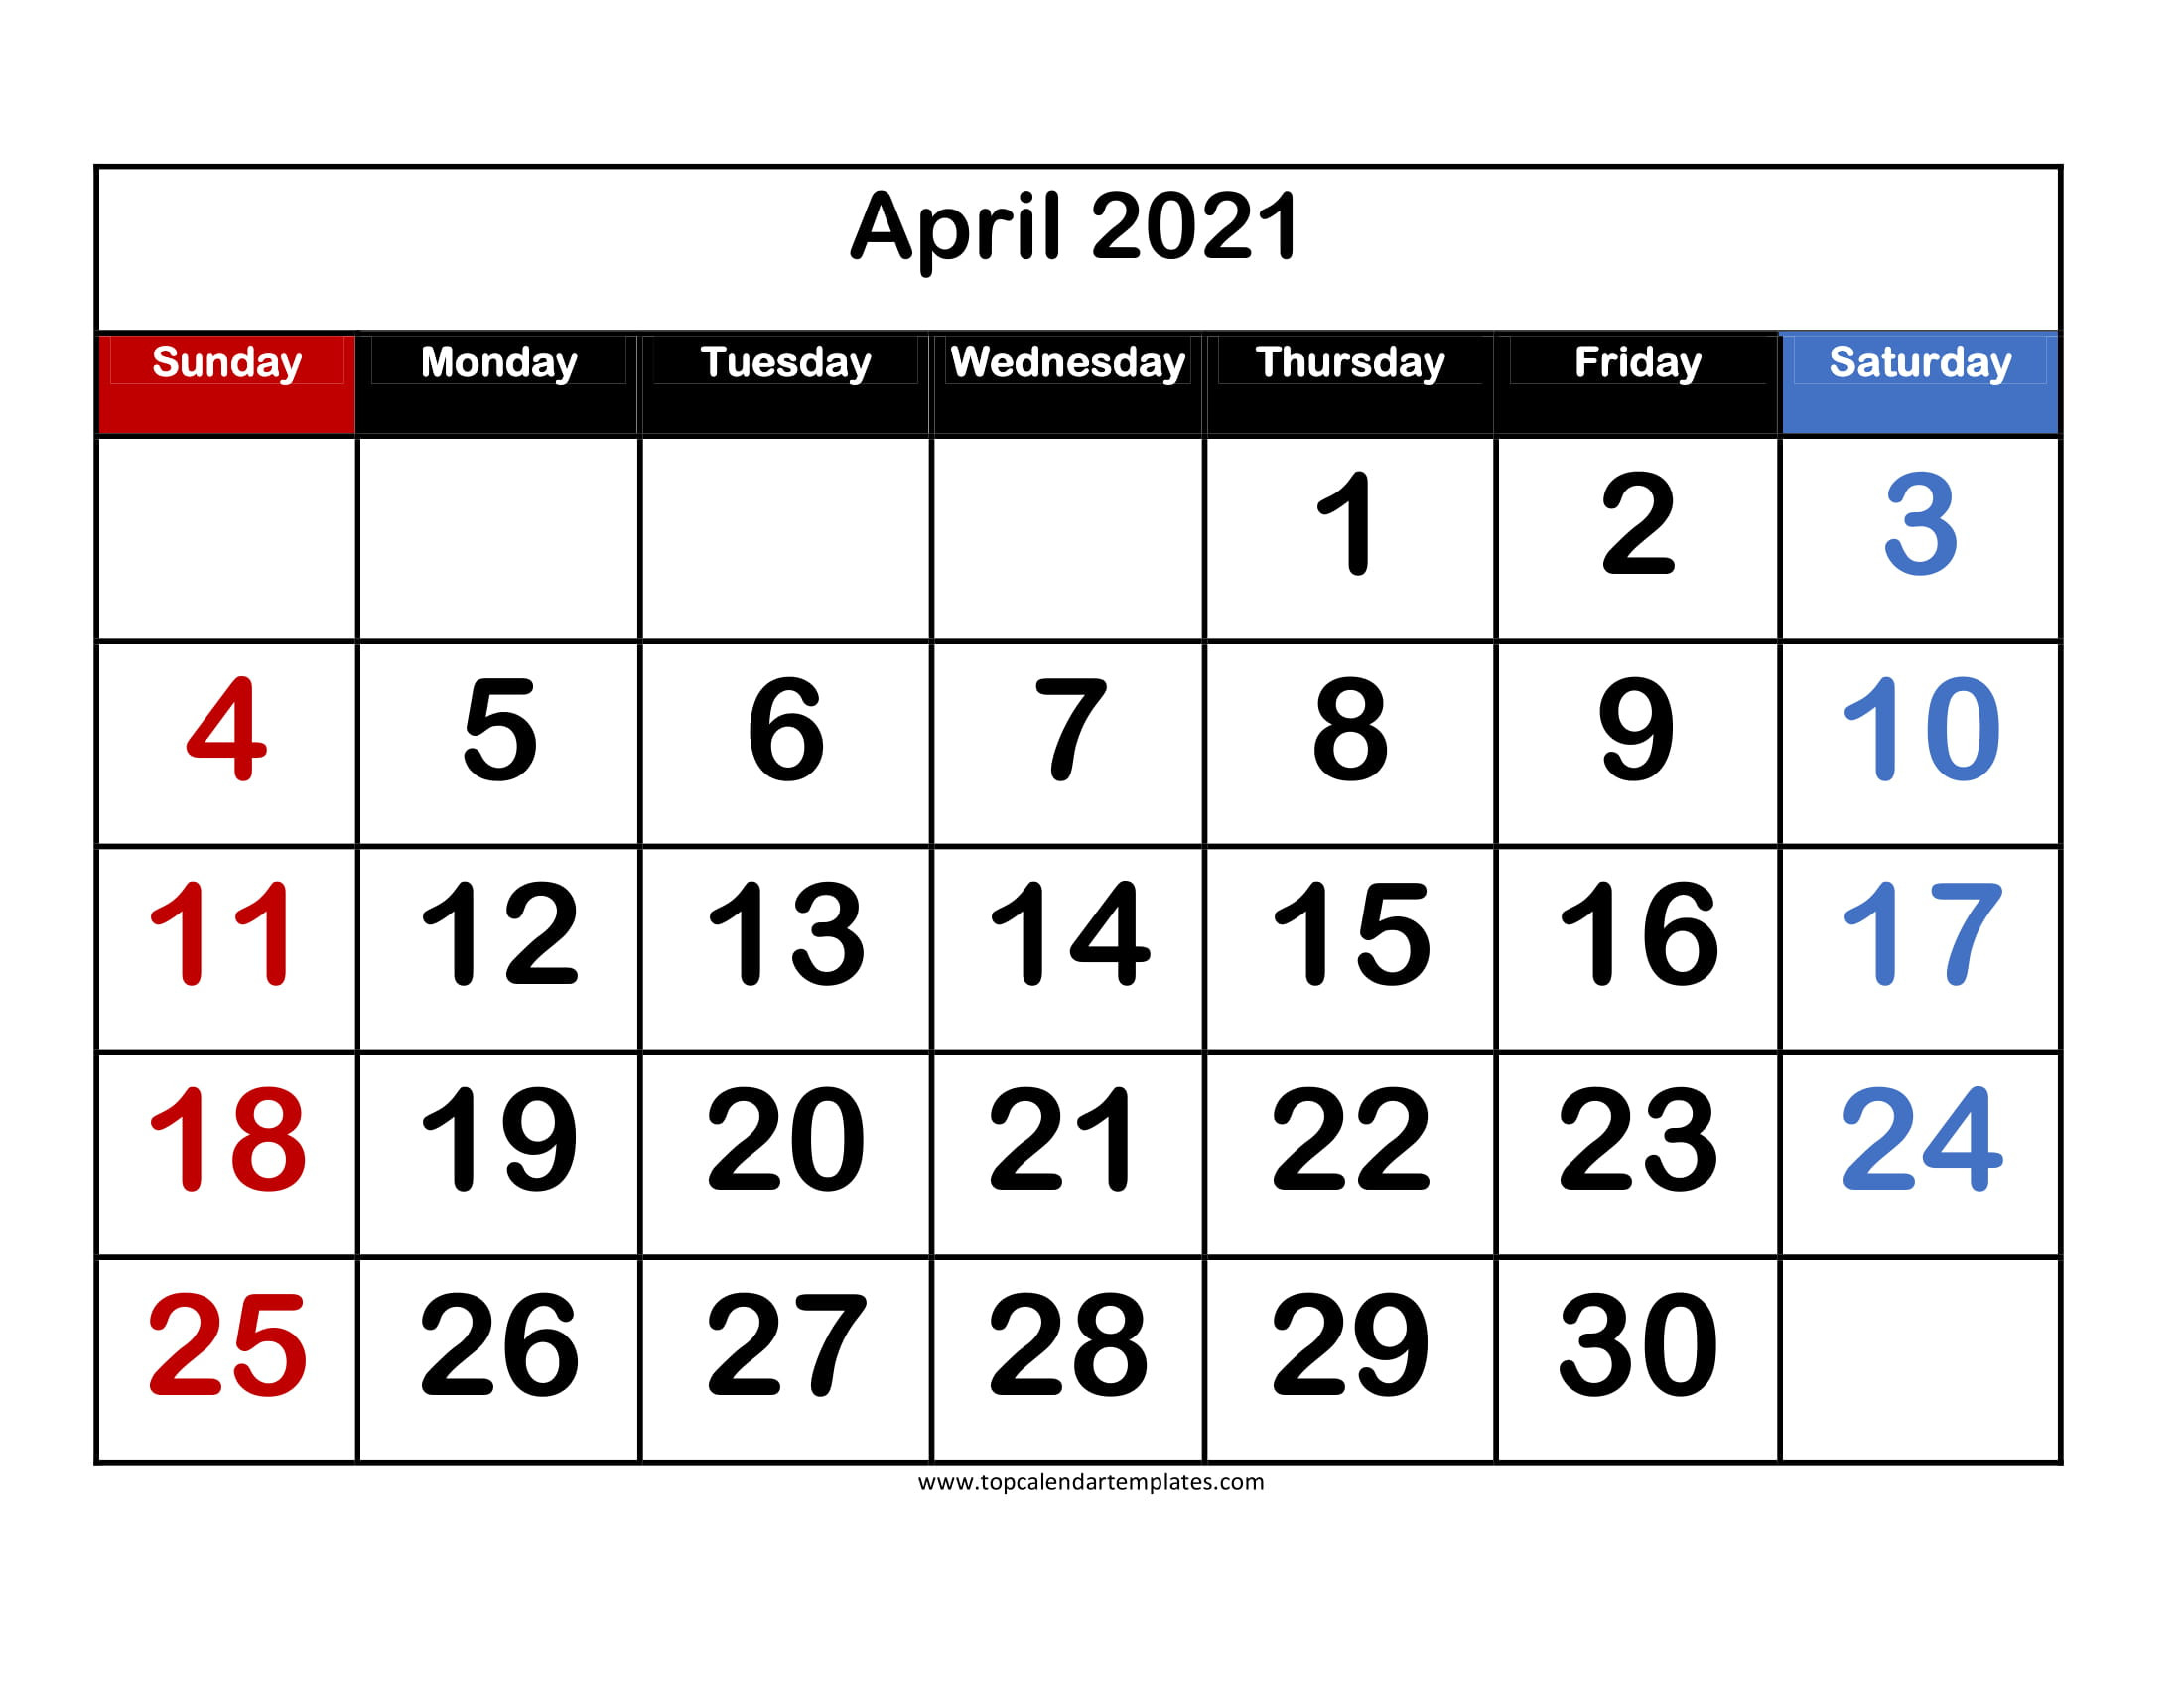 Free April 2021 Calendar Printable - Monthly Template-Printable Bill Calendar 2021 April May